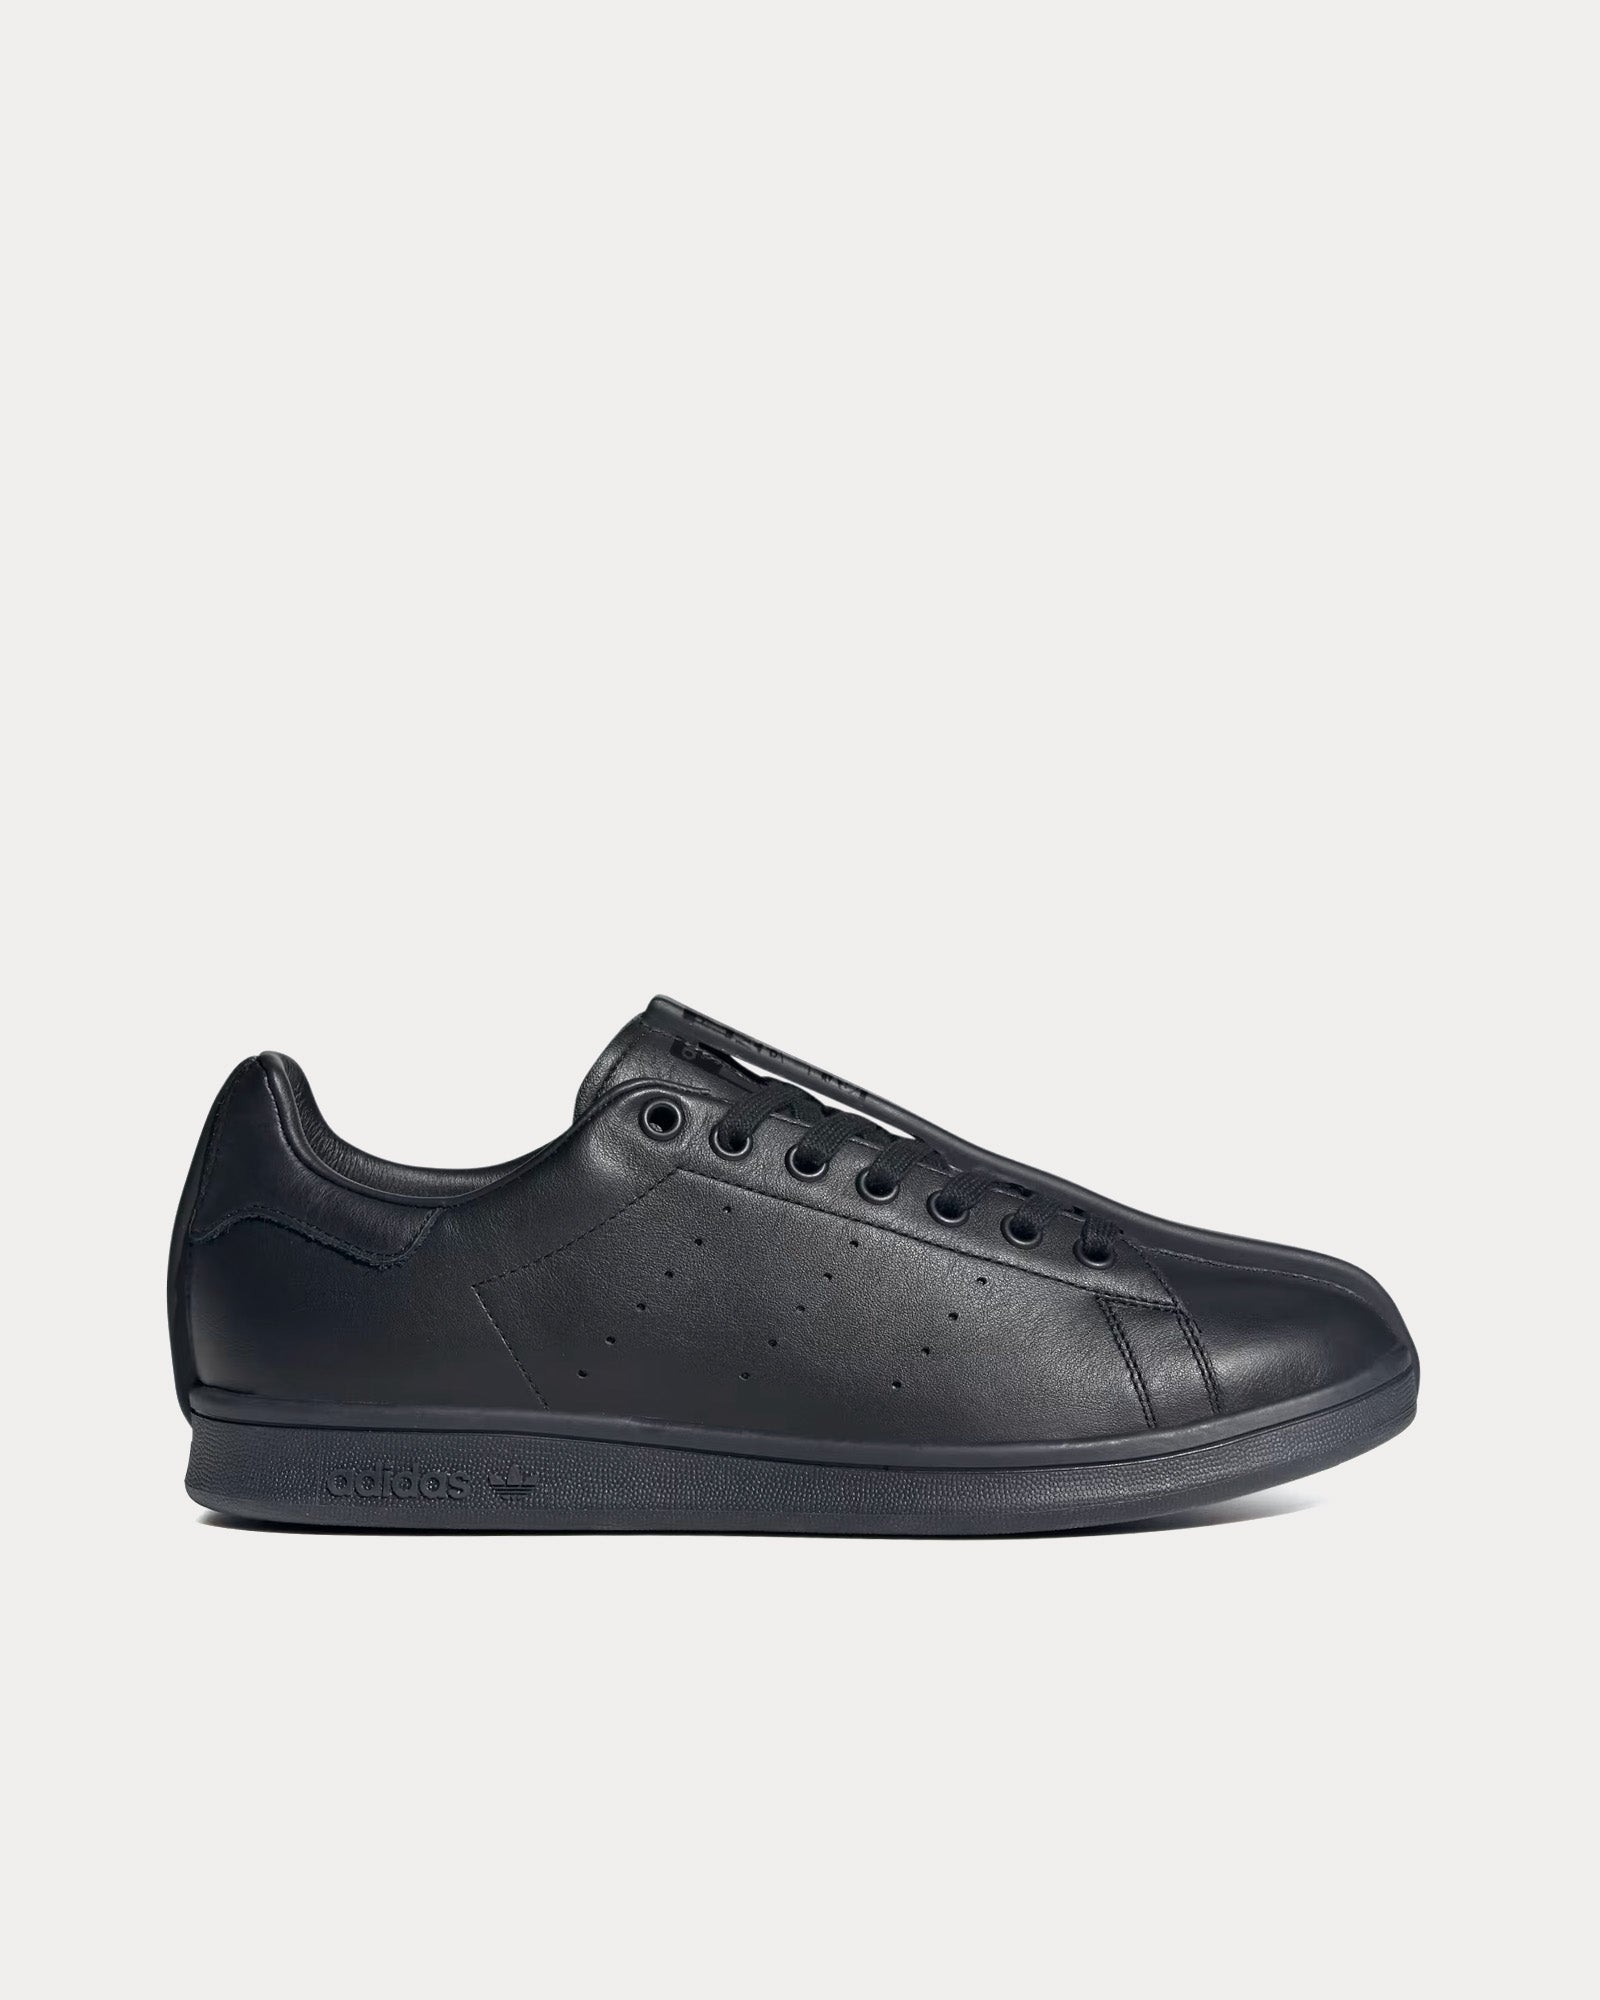 Adidas x Craig Green - Split Stan Smith Core Black / Core Black / Granite Low Top Sneakers